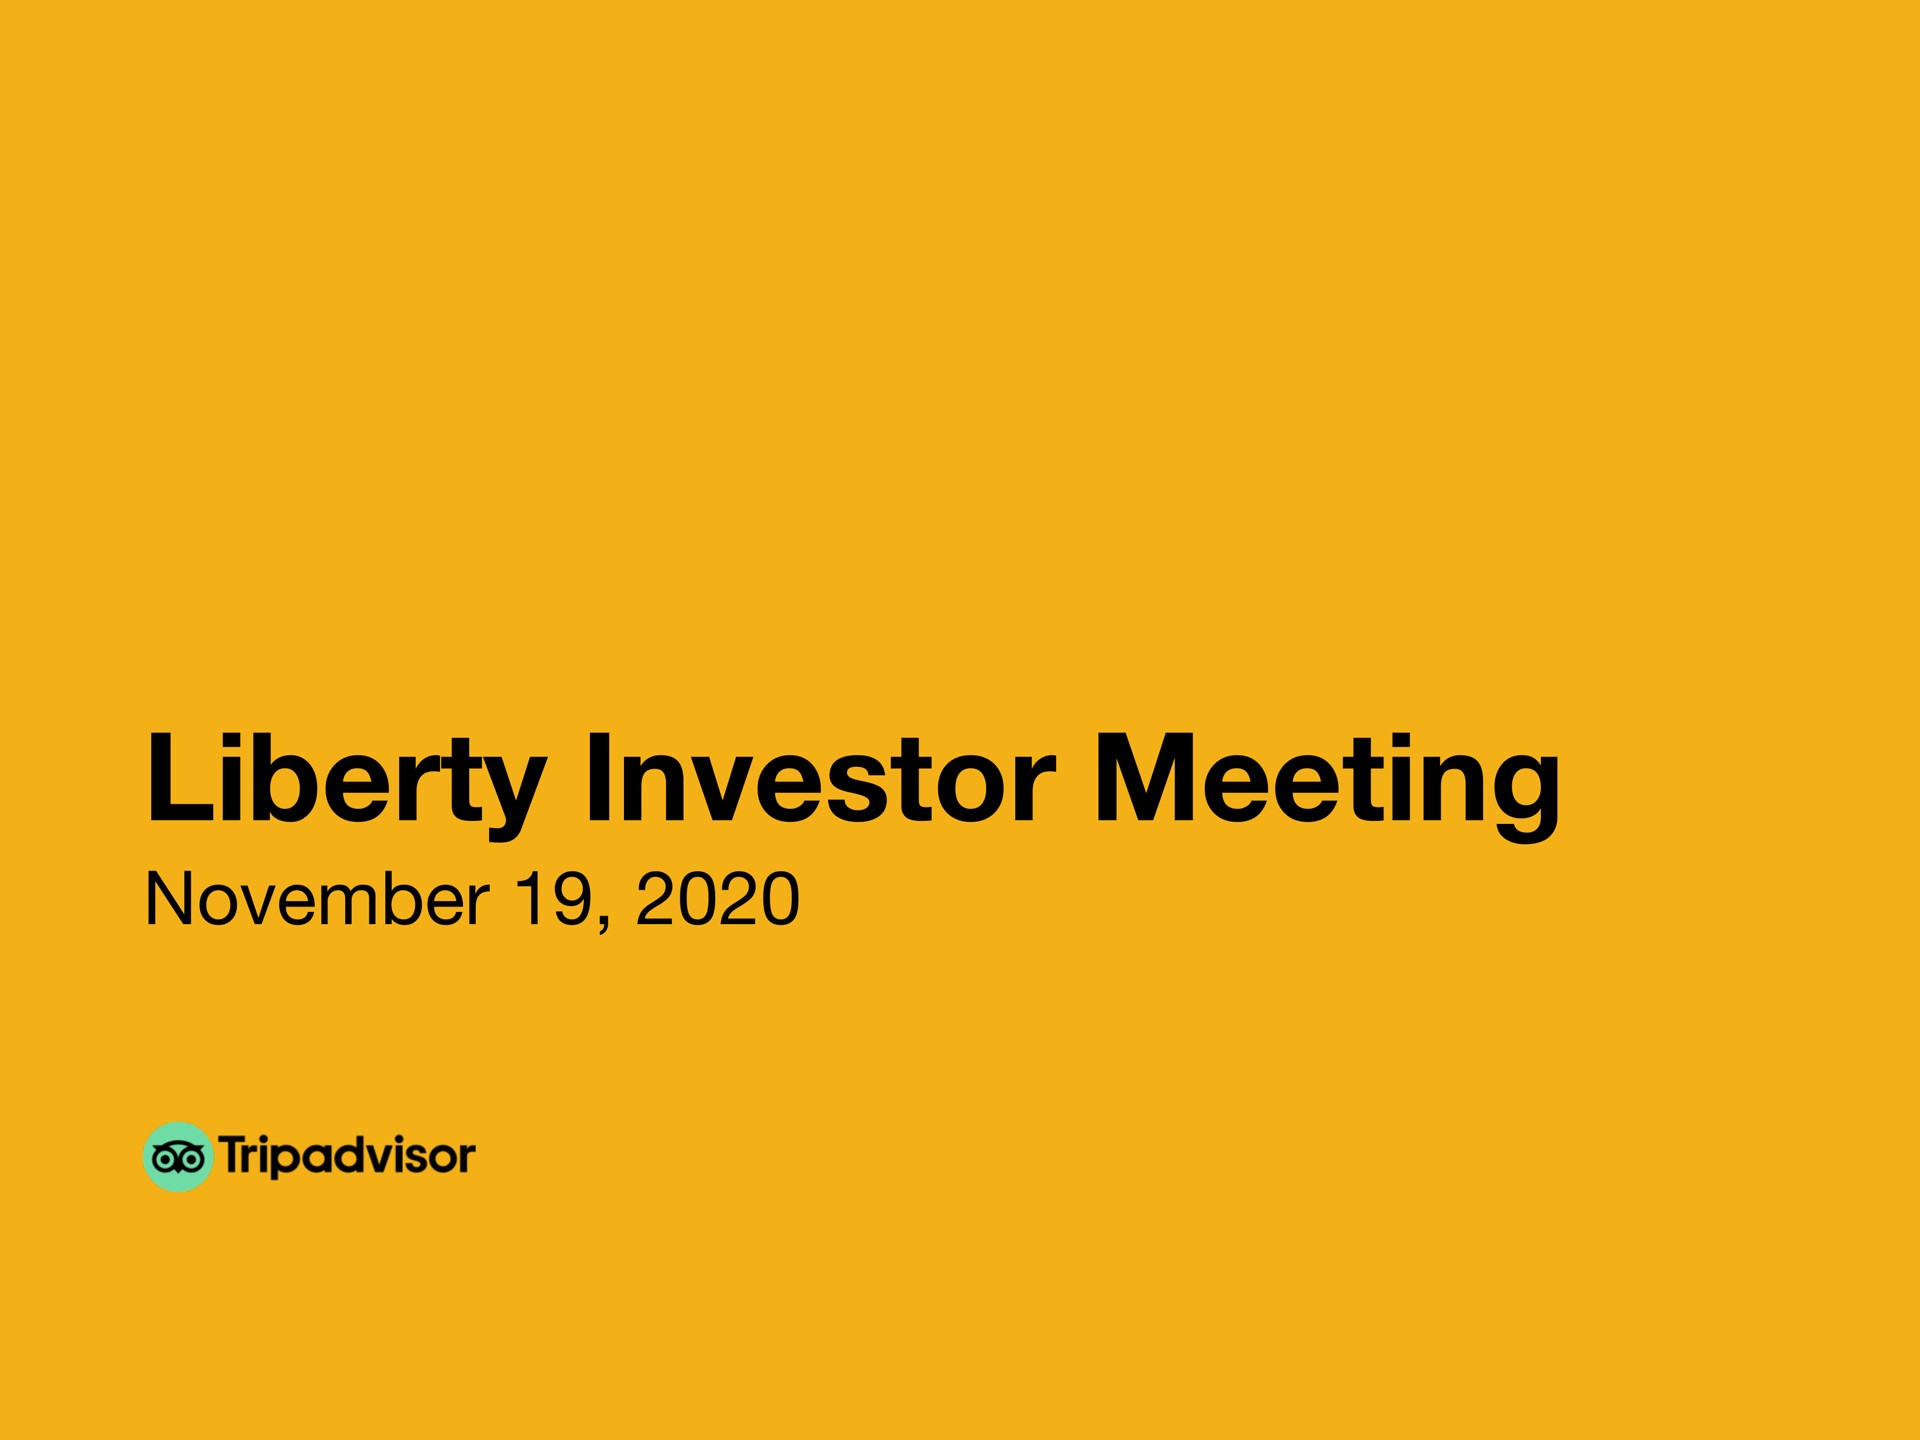 liberty investor meeting | Tripadvisor